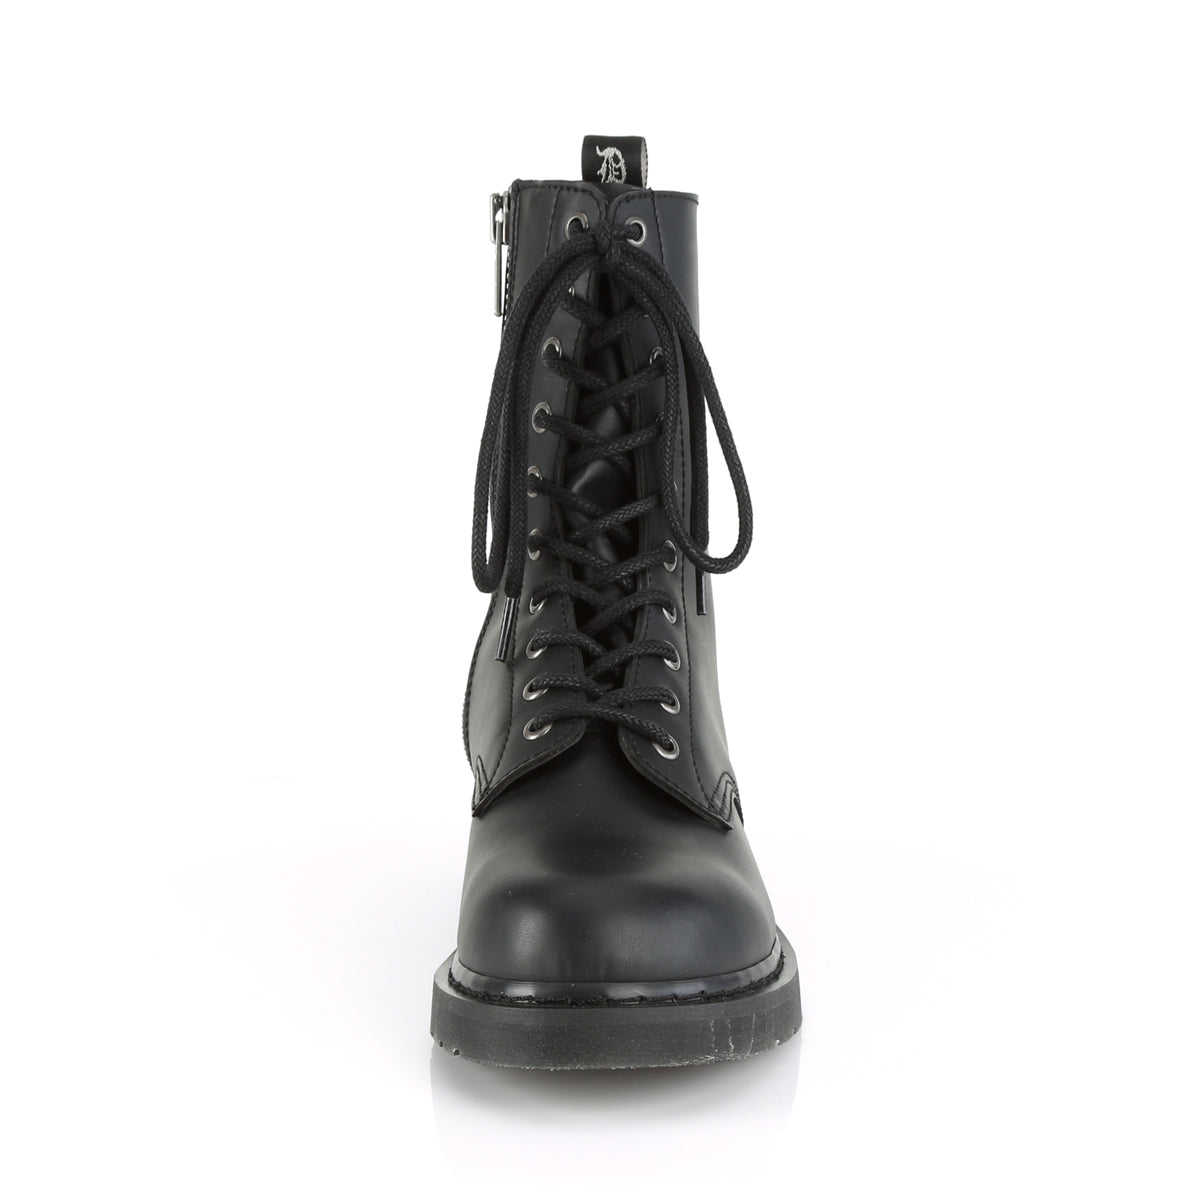 BOLT-200 Black Vegan Leather Mid-Calf Boot Demonia